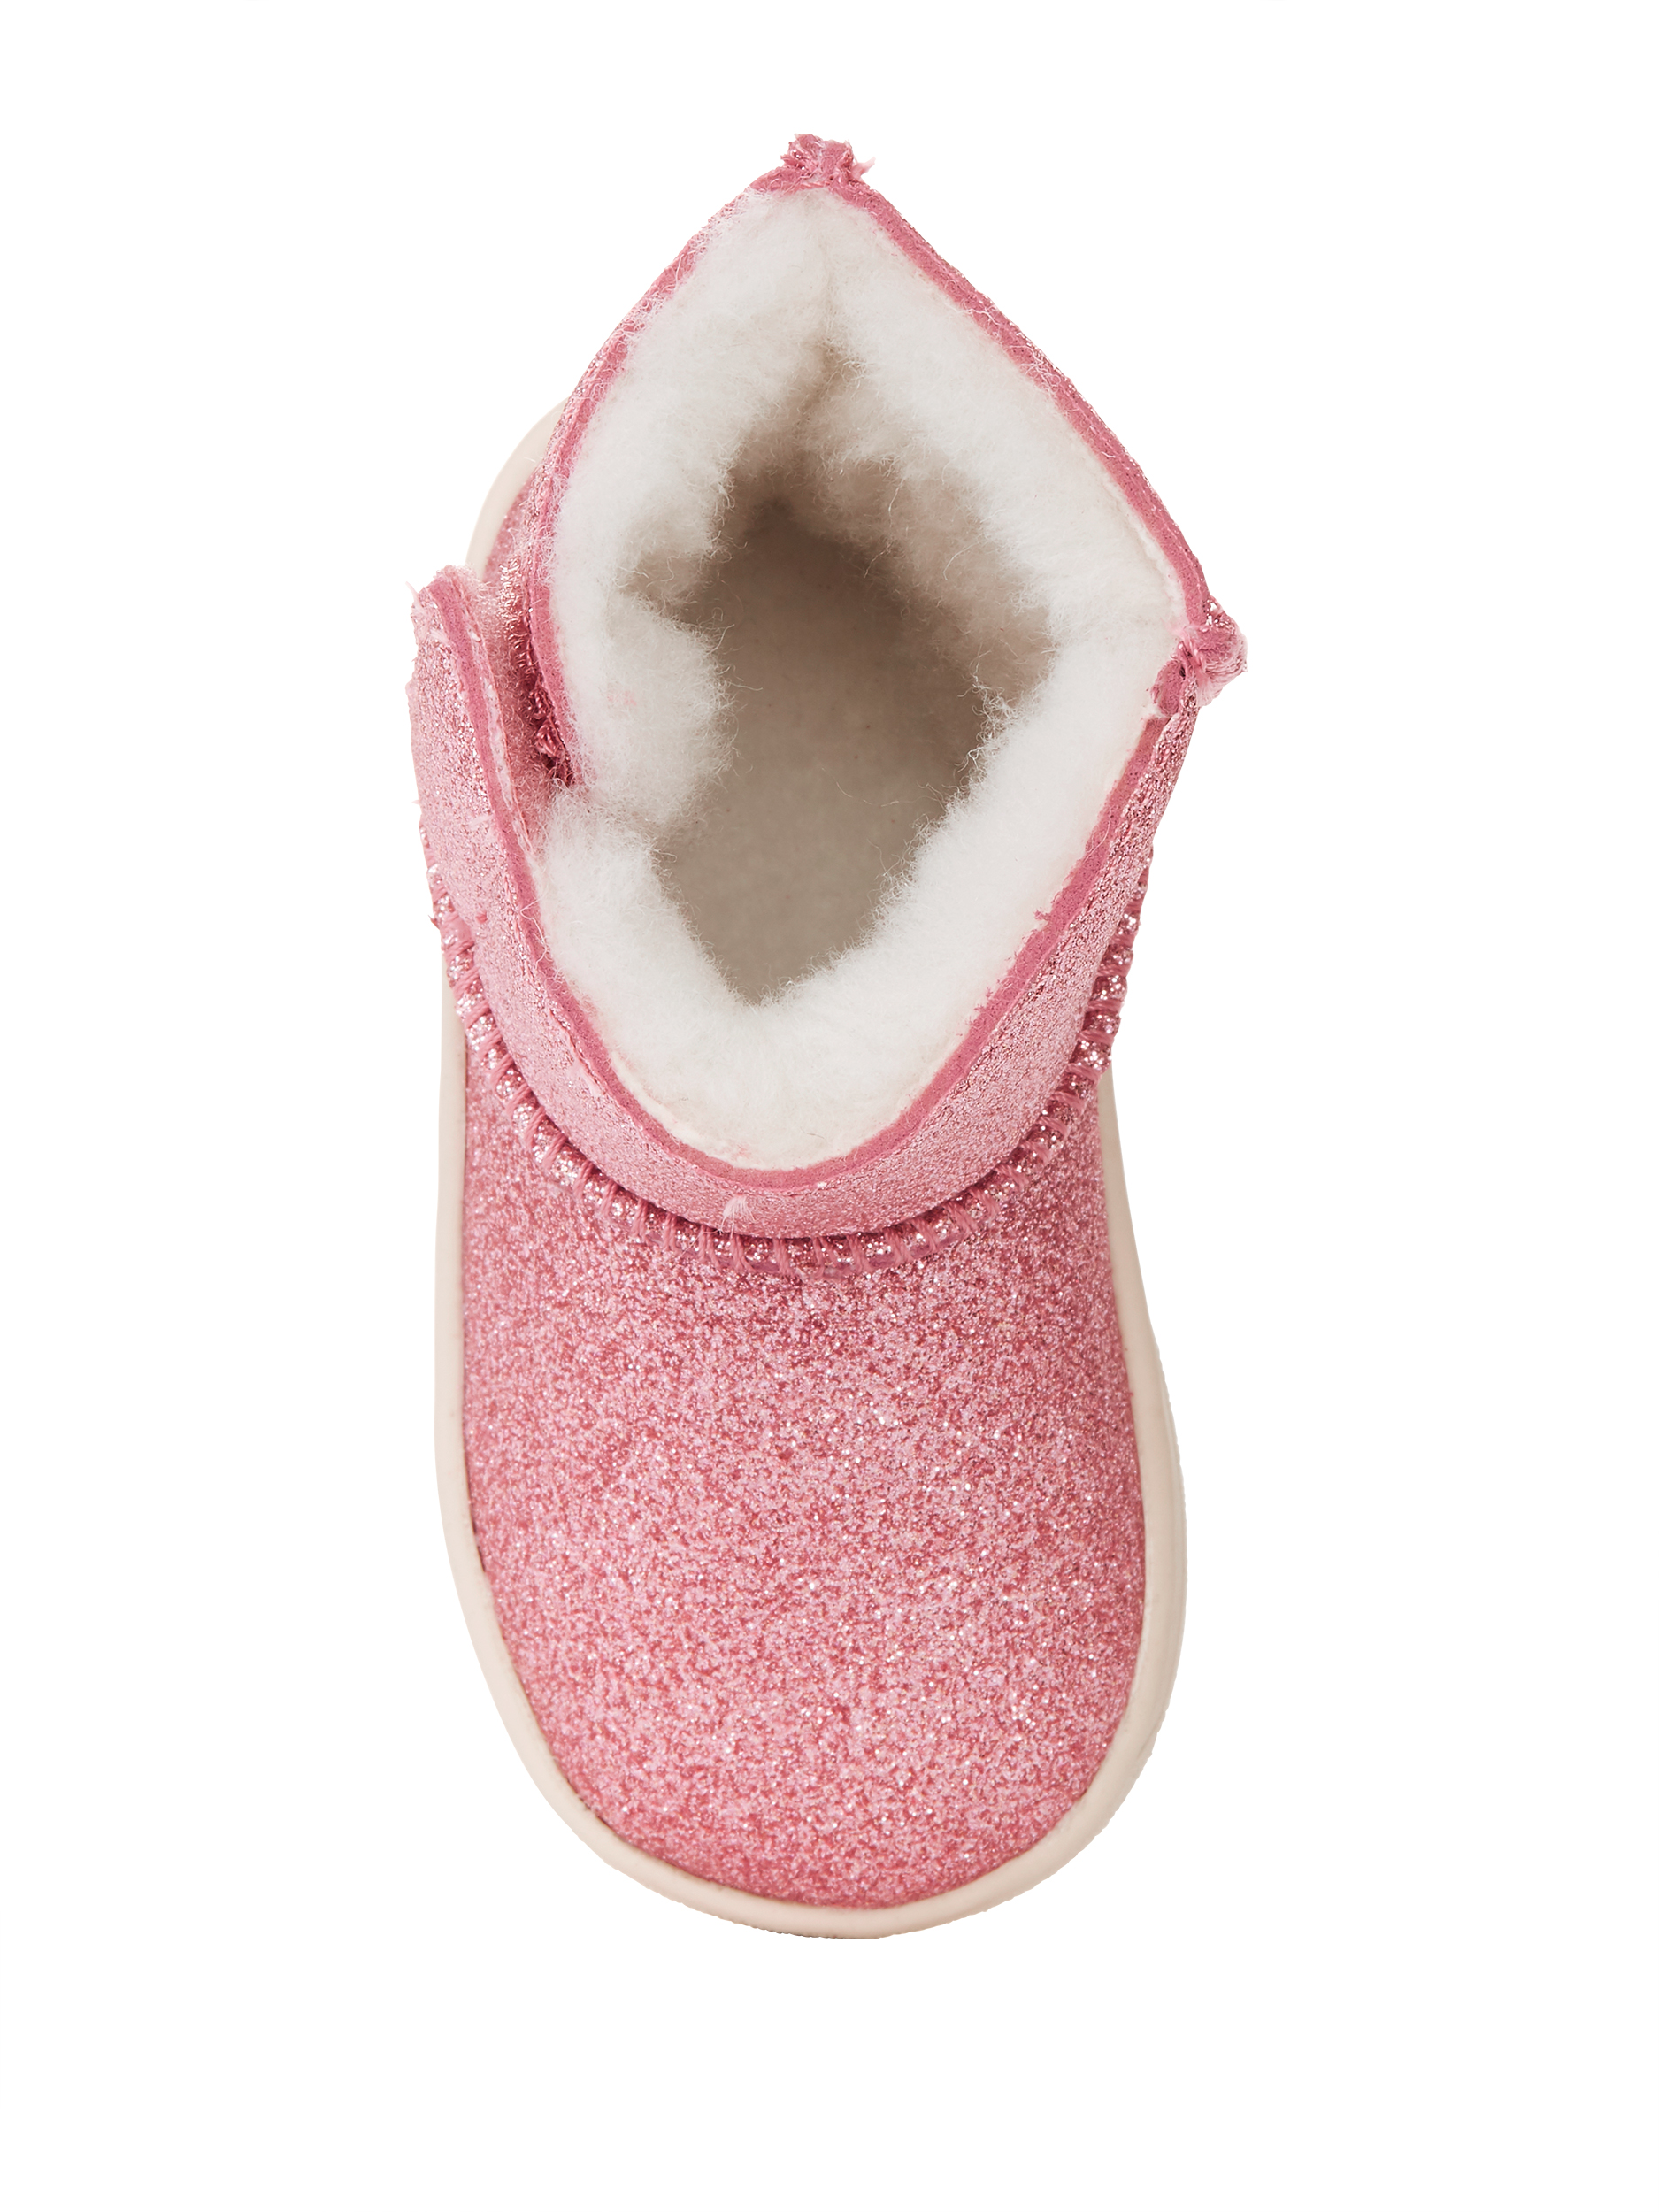 Wonder Nation Sparkly Faux Fur Boots (Infant Girls) - image 5 of 6